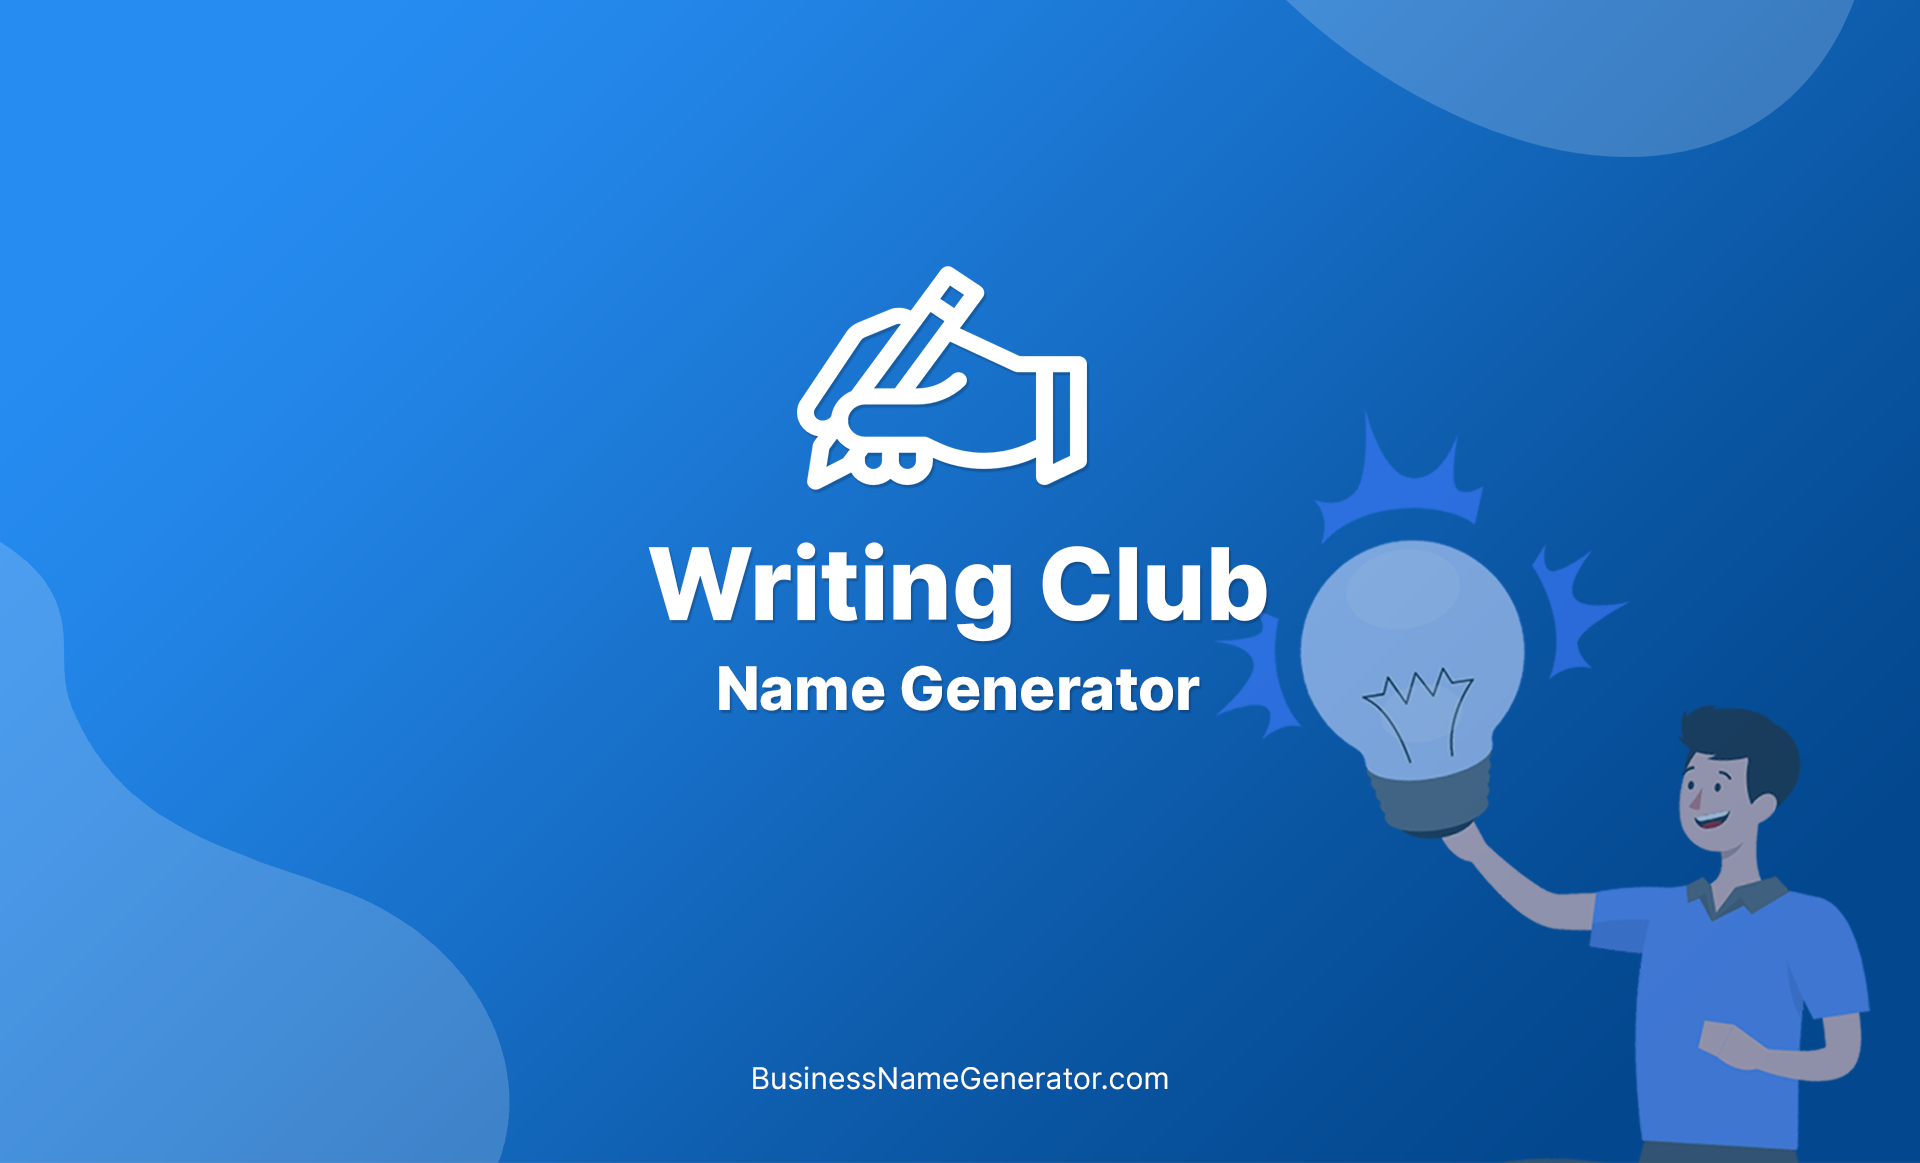 Writing Club Name Generator